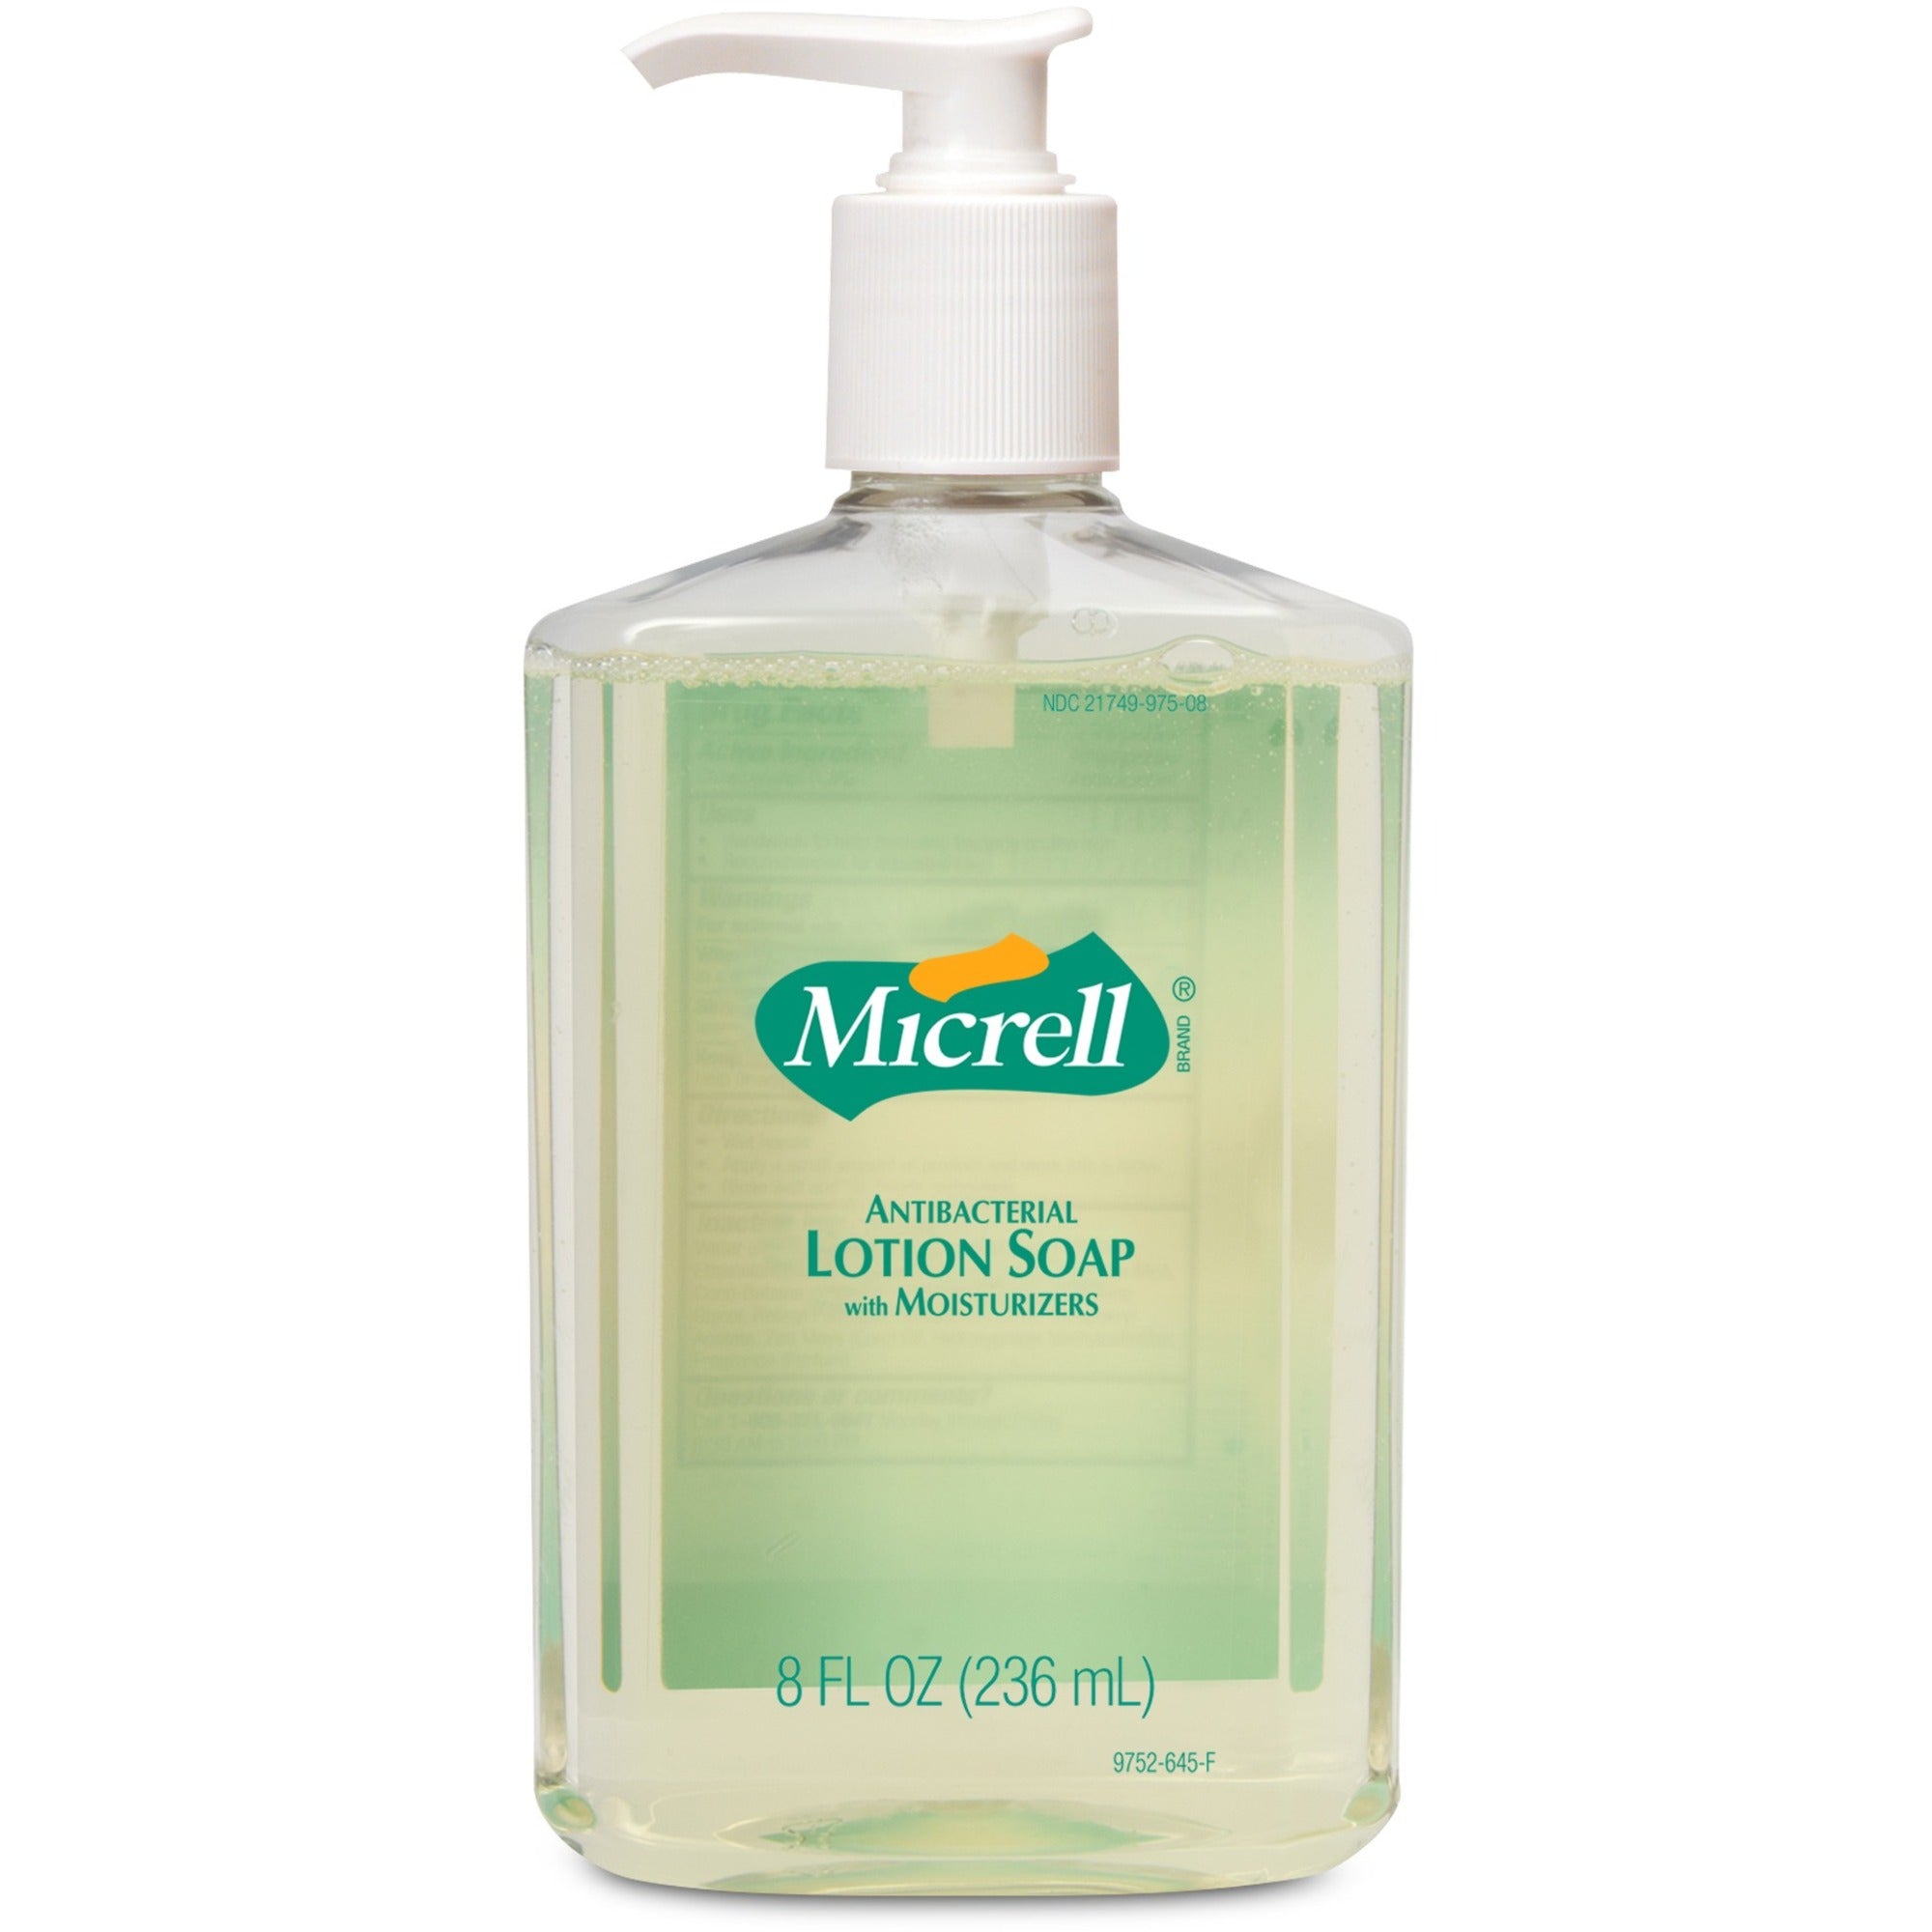 micrell-antibacterial-lotion-soap-citrus-scentfor-8-fl-oz-2366-ml-push-pump-dispenser-kill-germs-hand-antibacterial-anti-irritant-bio-based-1-each_goj975212 - 1